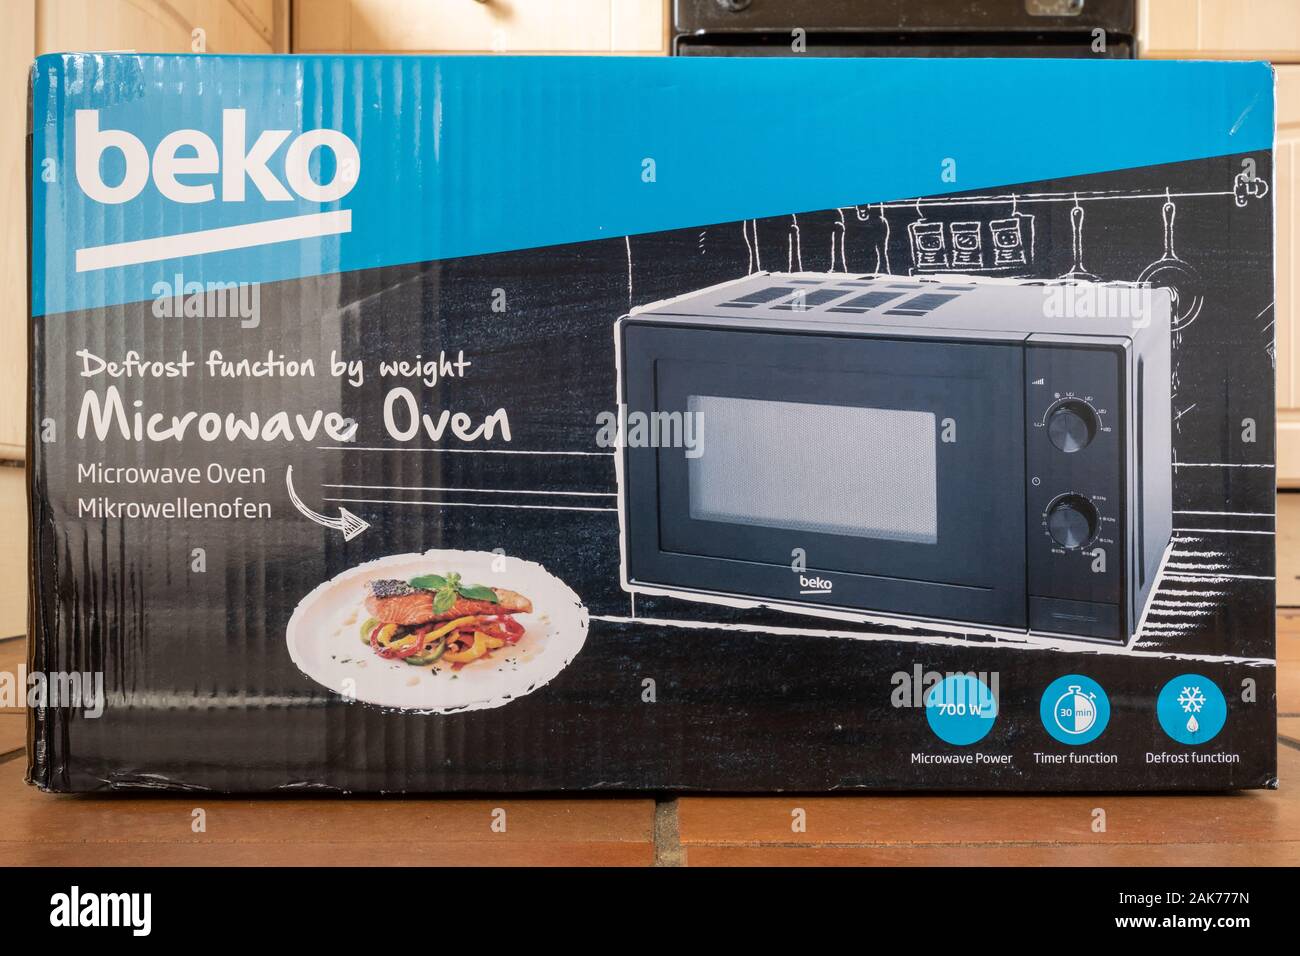 New Beko microwave oven in cardboard box packaging Stock Photo